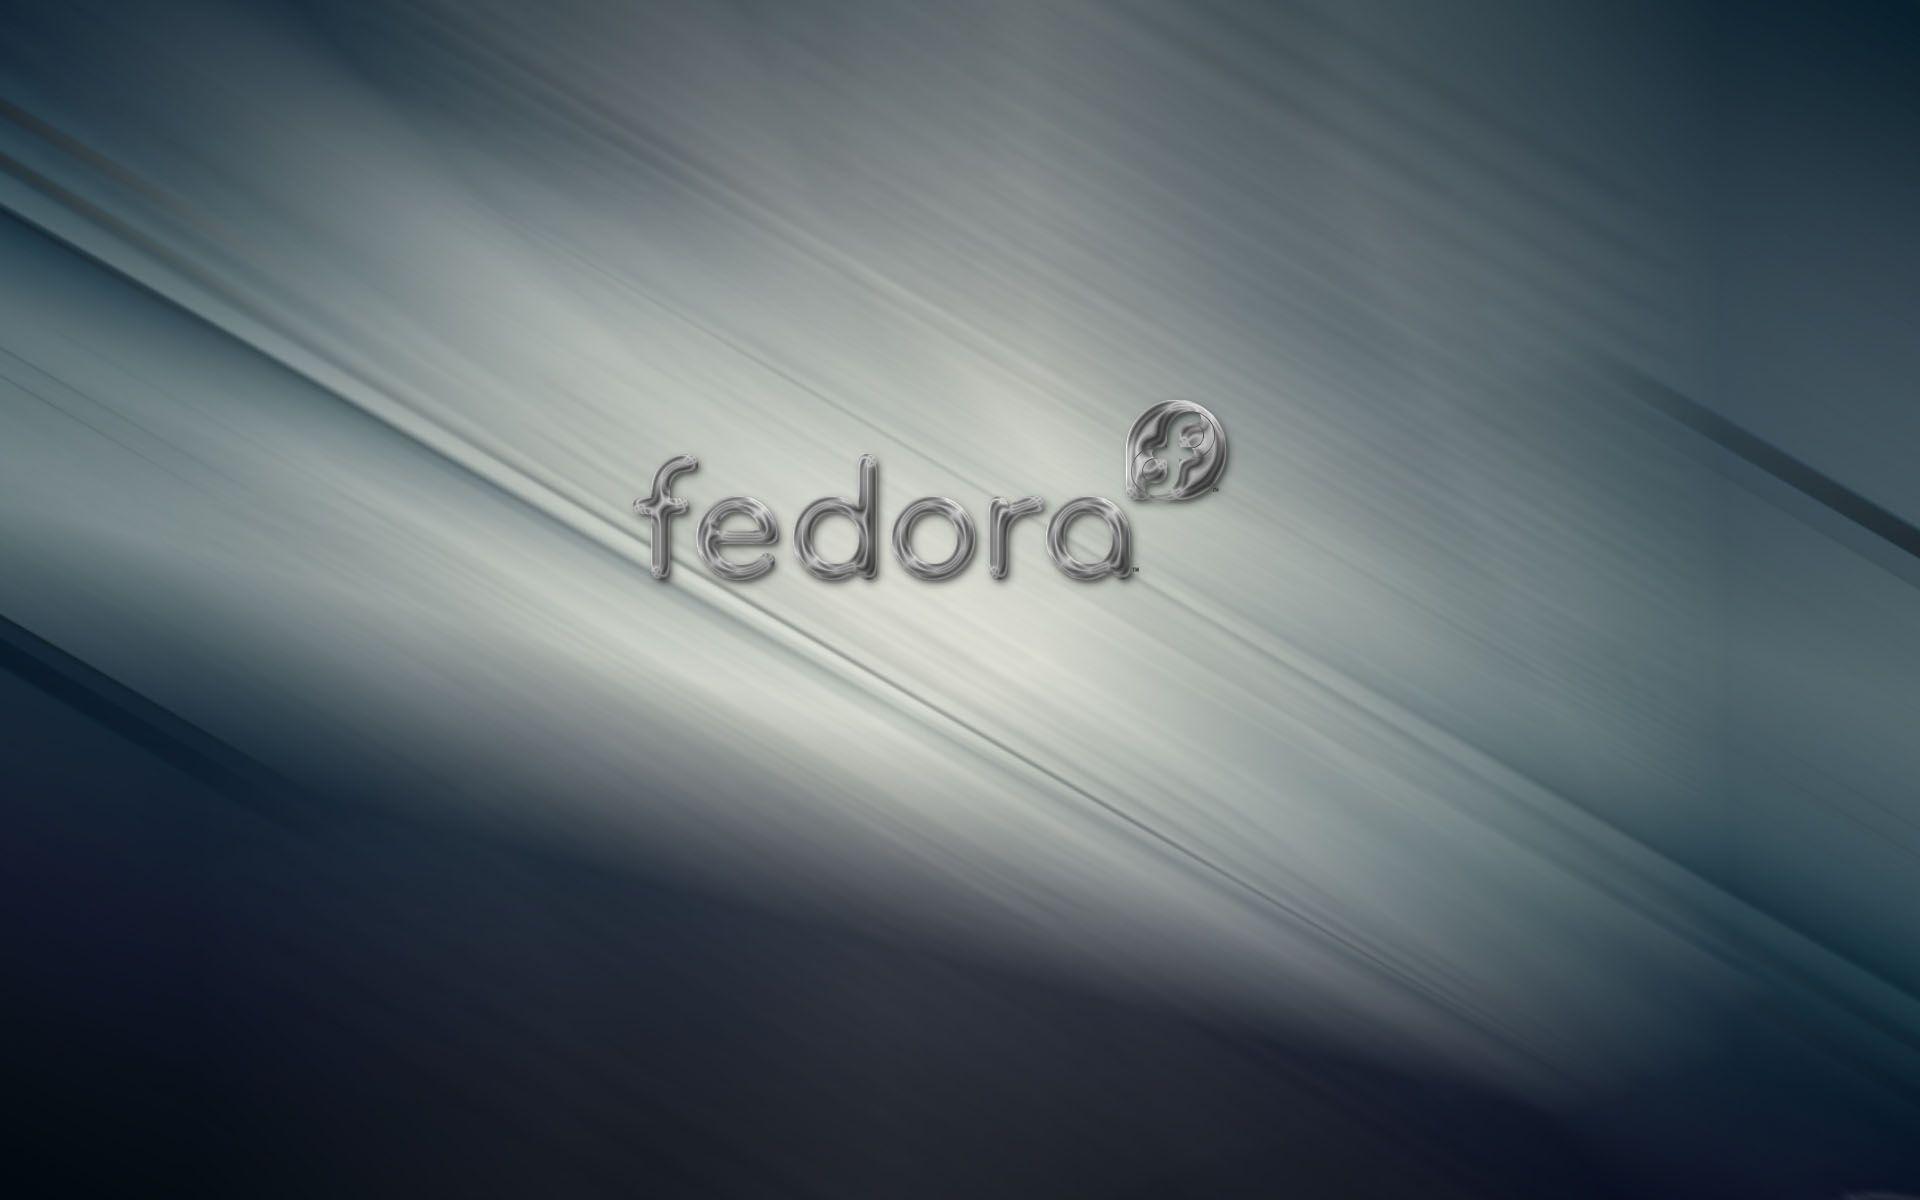 Fedora Wallpaper. Fedora Background. Fedora Wallpaper Widescreen